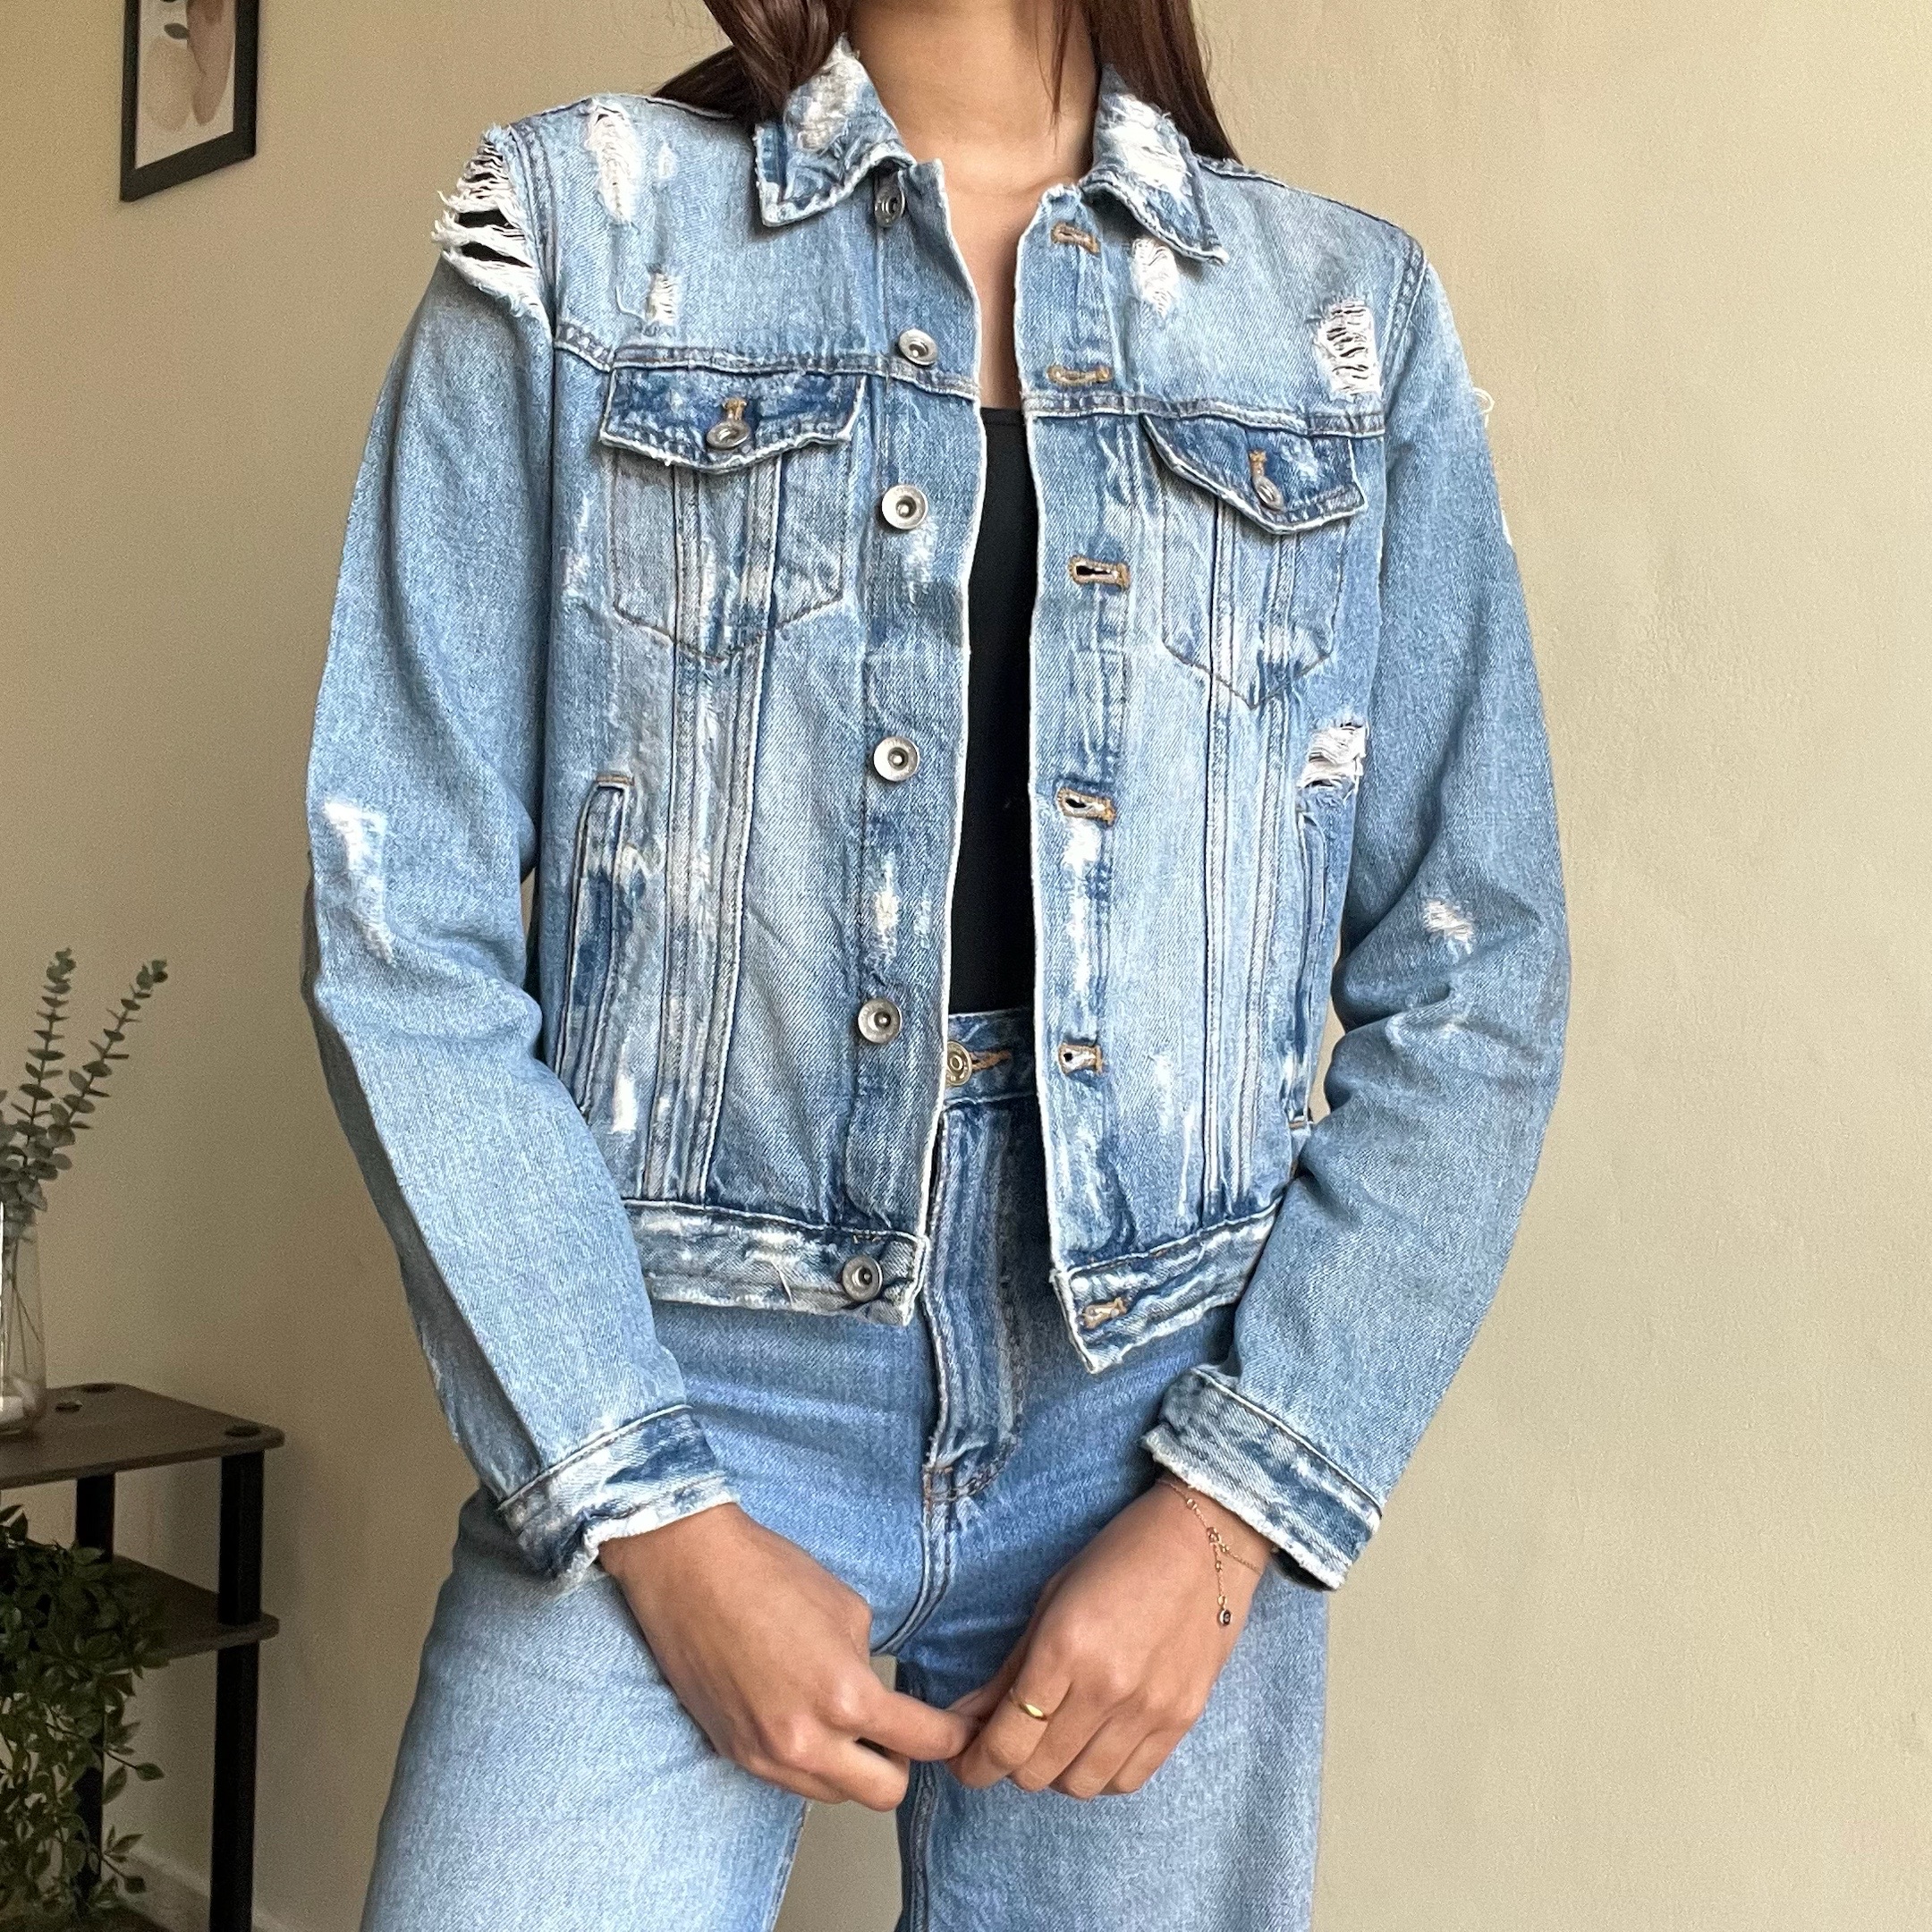 Kareena Steps Out In Zara Denim Jacket For Day Trip With Her Girls -  Boldsky.com